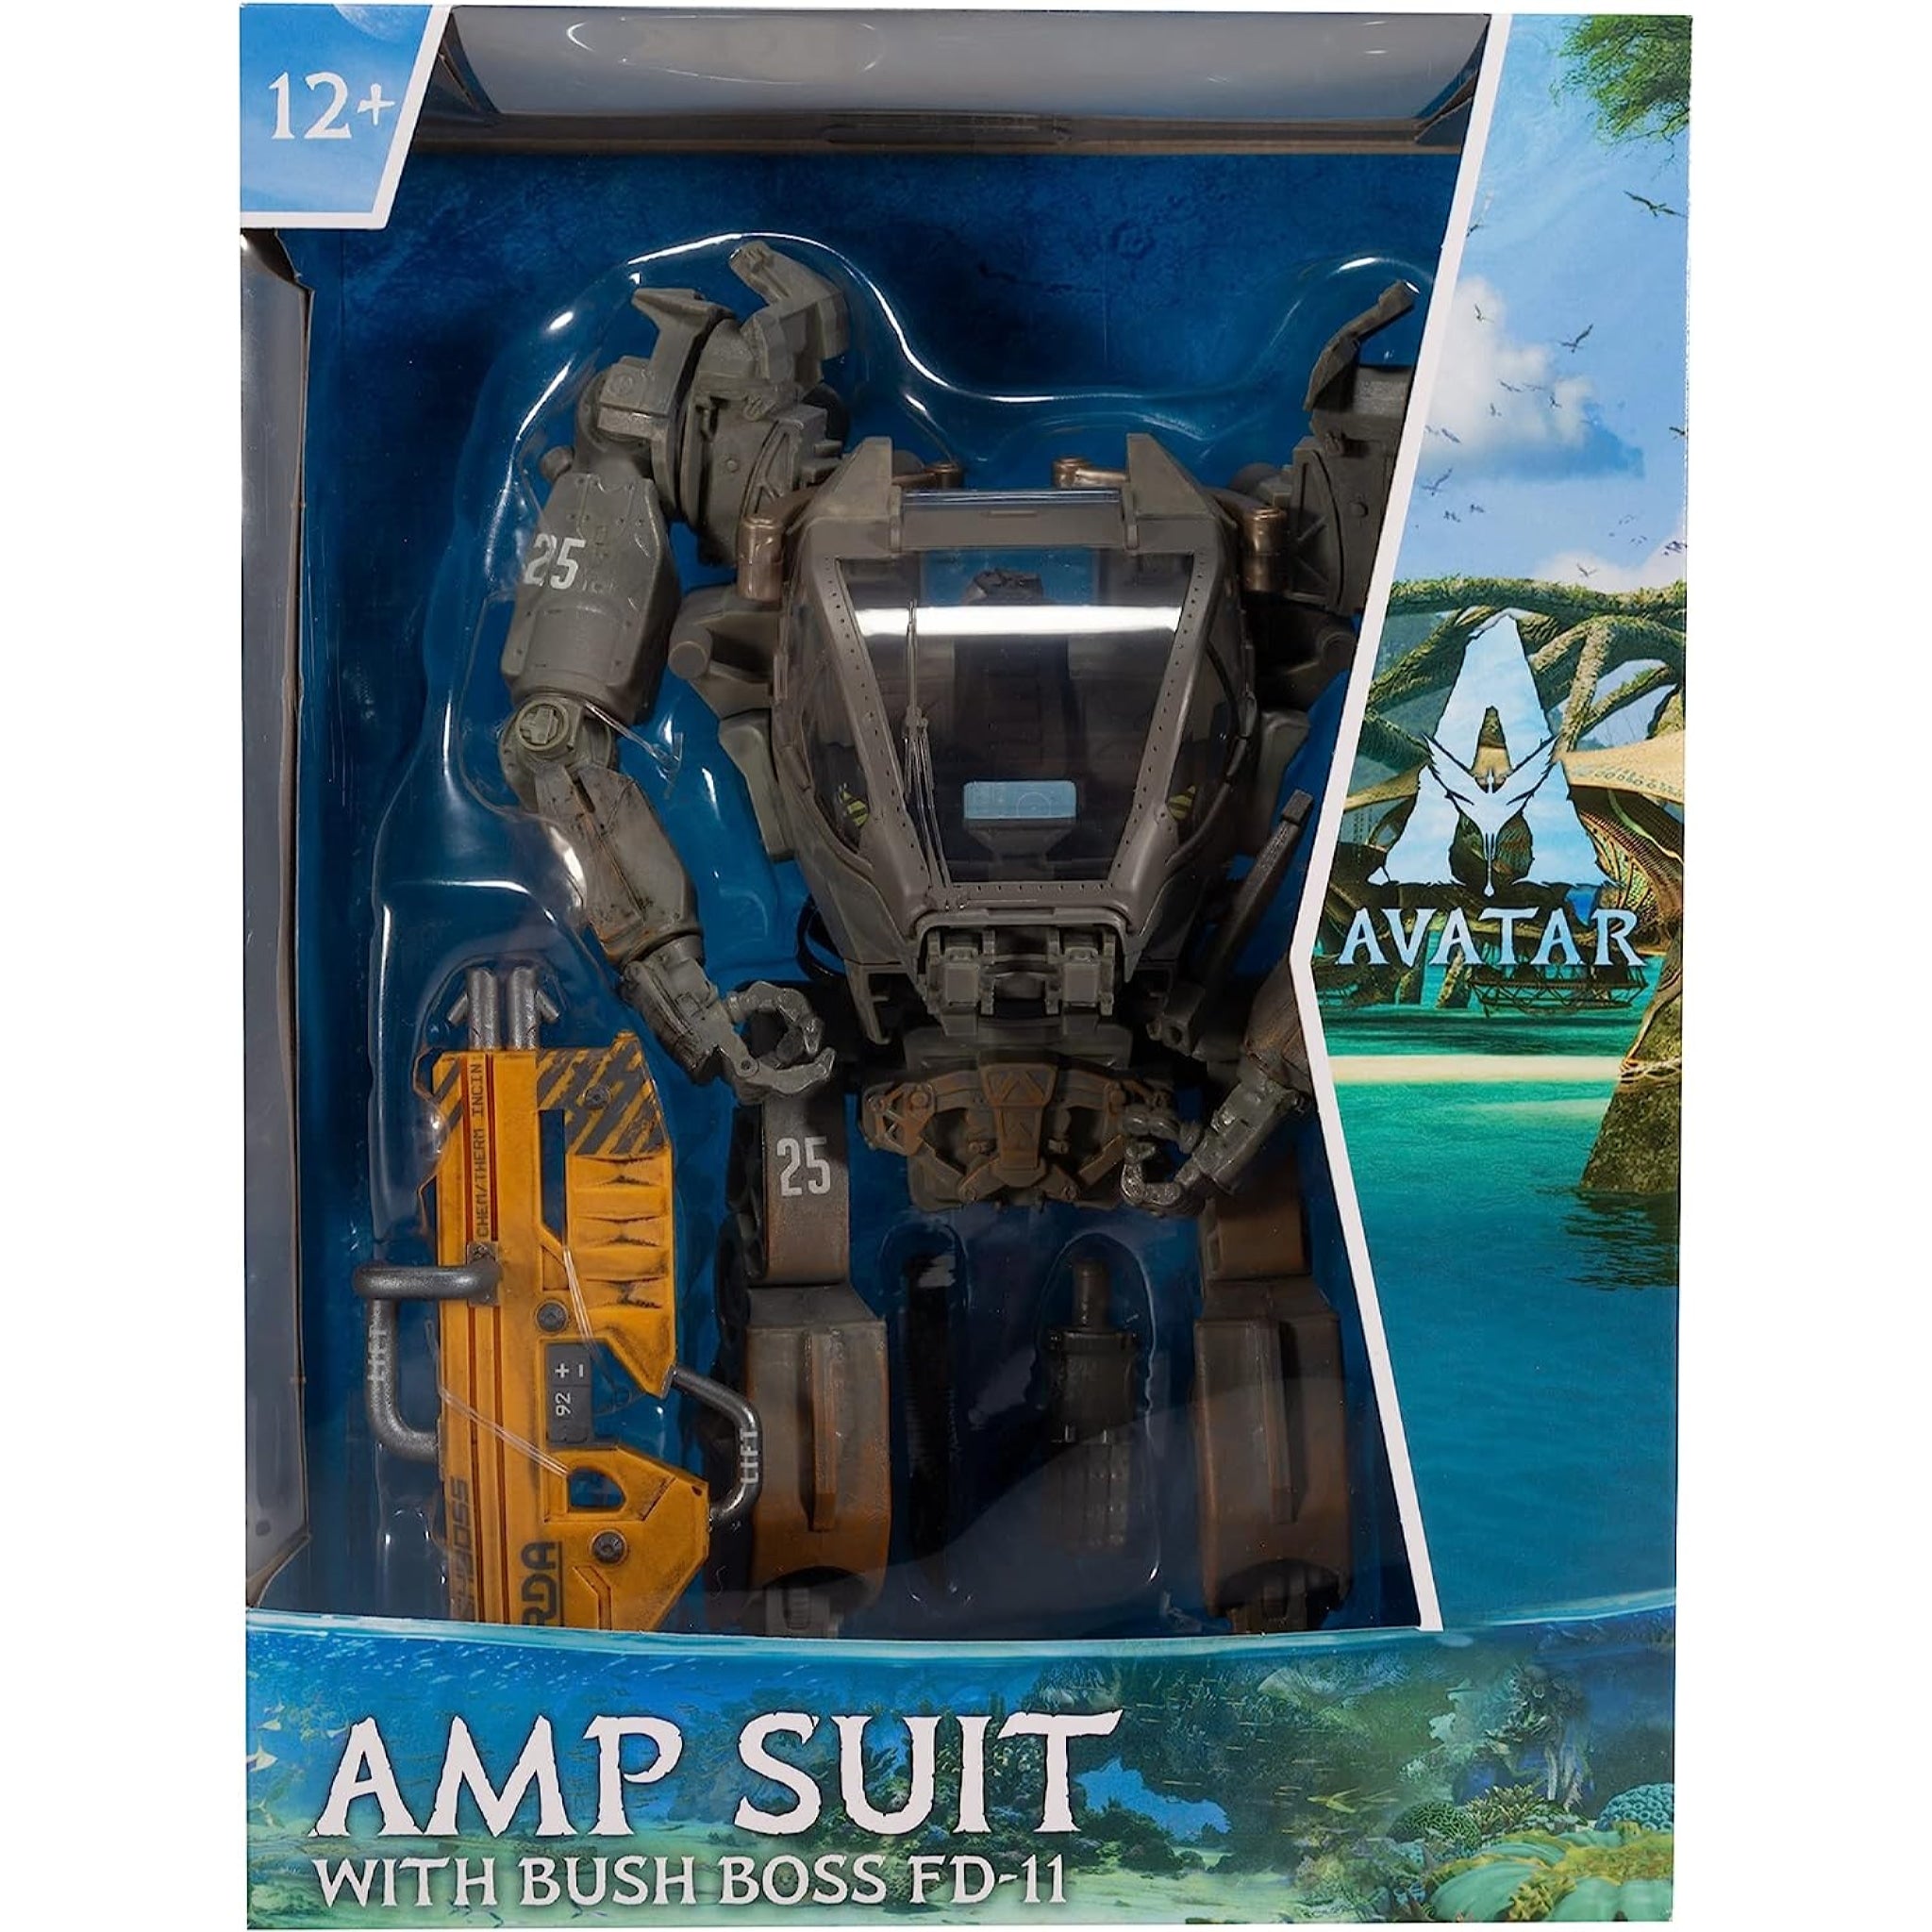 McFarlane Disney Avatar AMP Suit Action Mega Figure